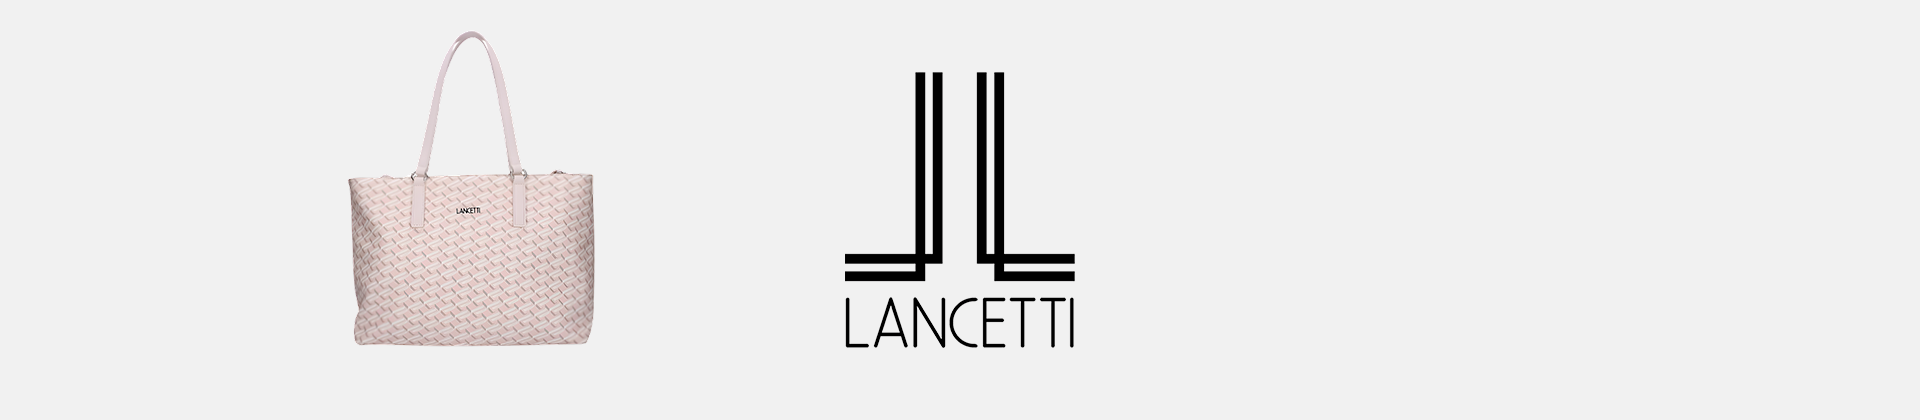 Lancetti clutch fashionable woman online